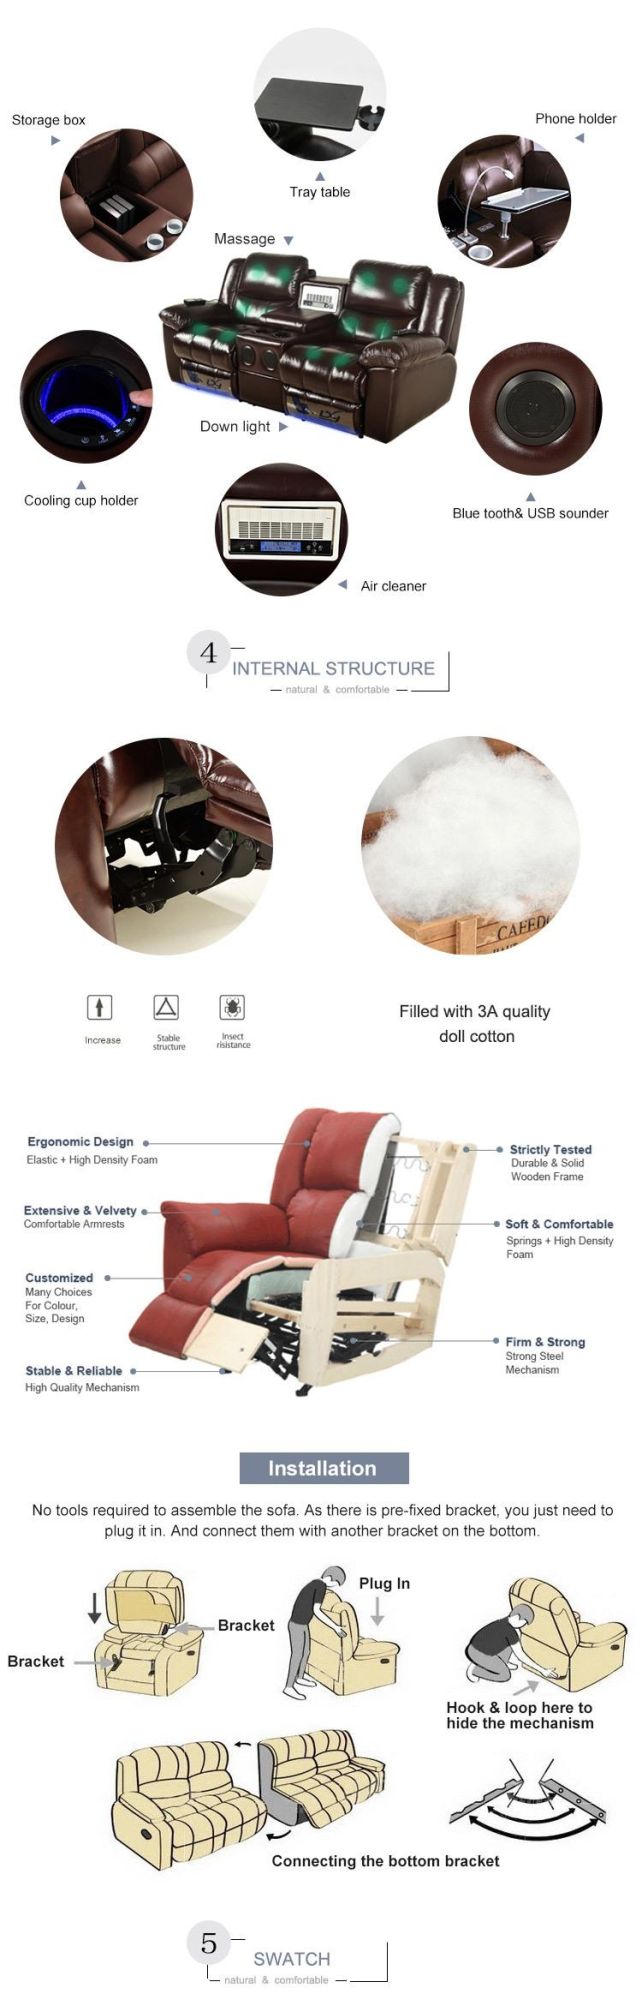 European Modern Home Sectional Function Bonded Leather Leisure Corner Sofa Furniture